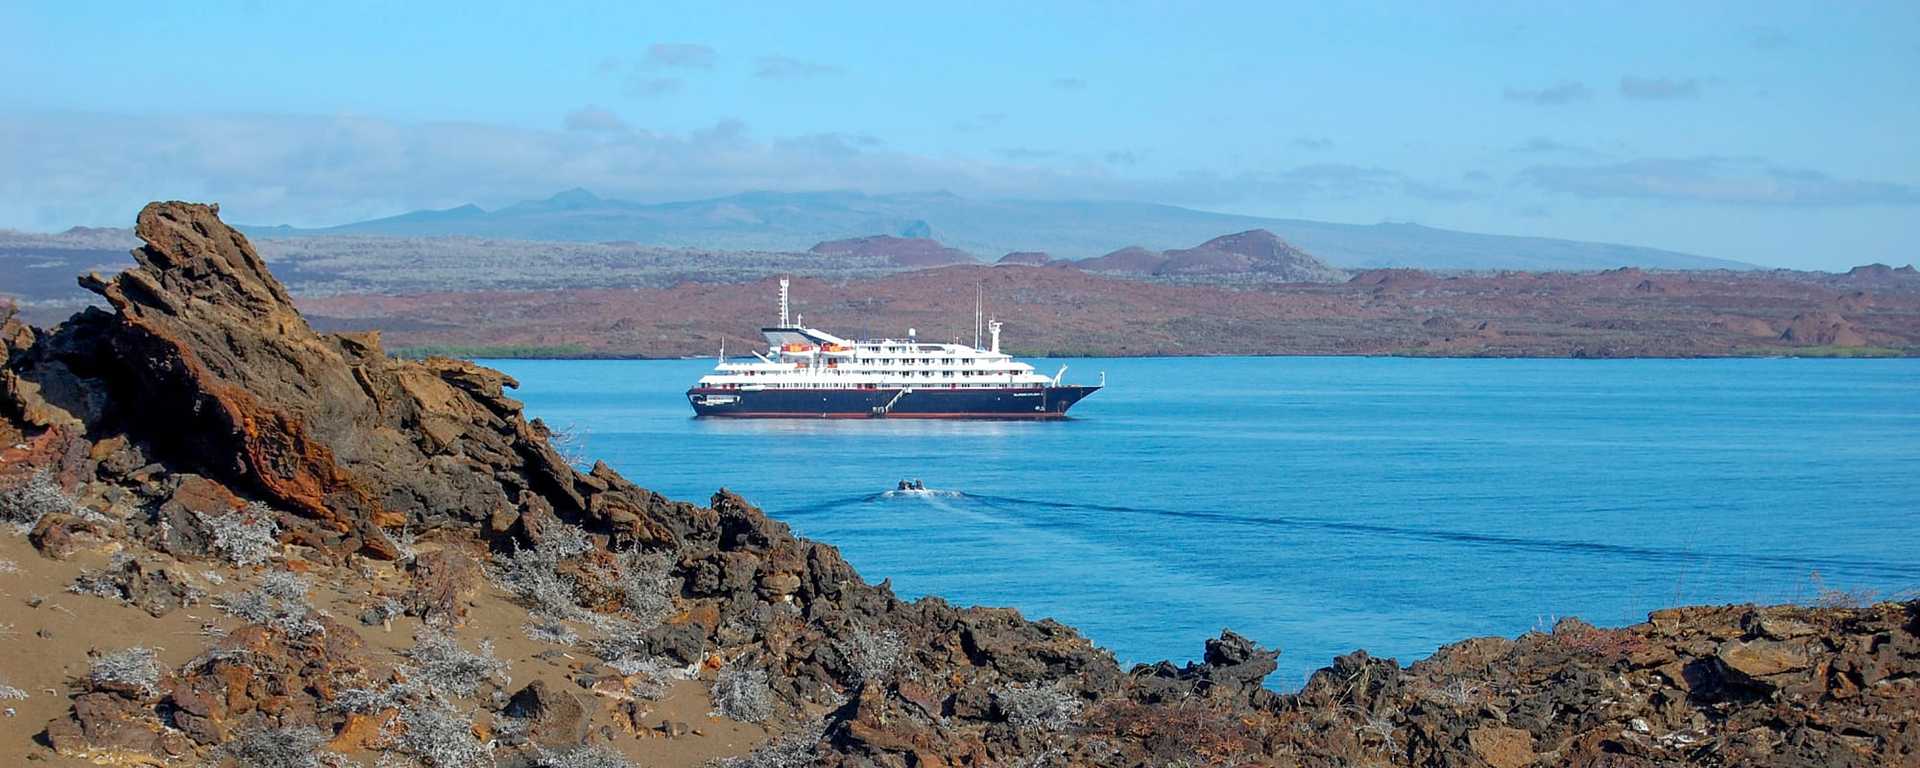 Volcanic landscape with cruise ship anchored in Sullivan bay at Santiago Island, Galapagos, Ecuador